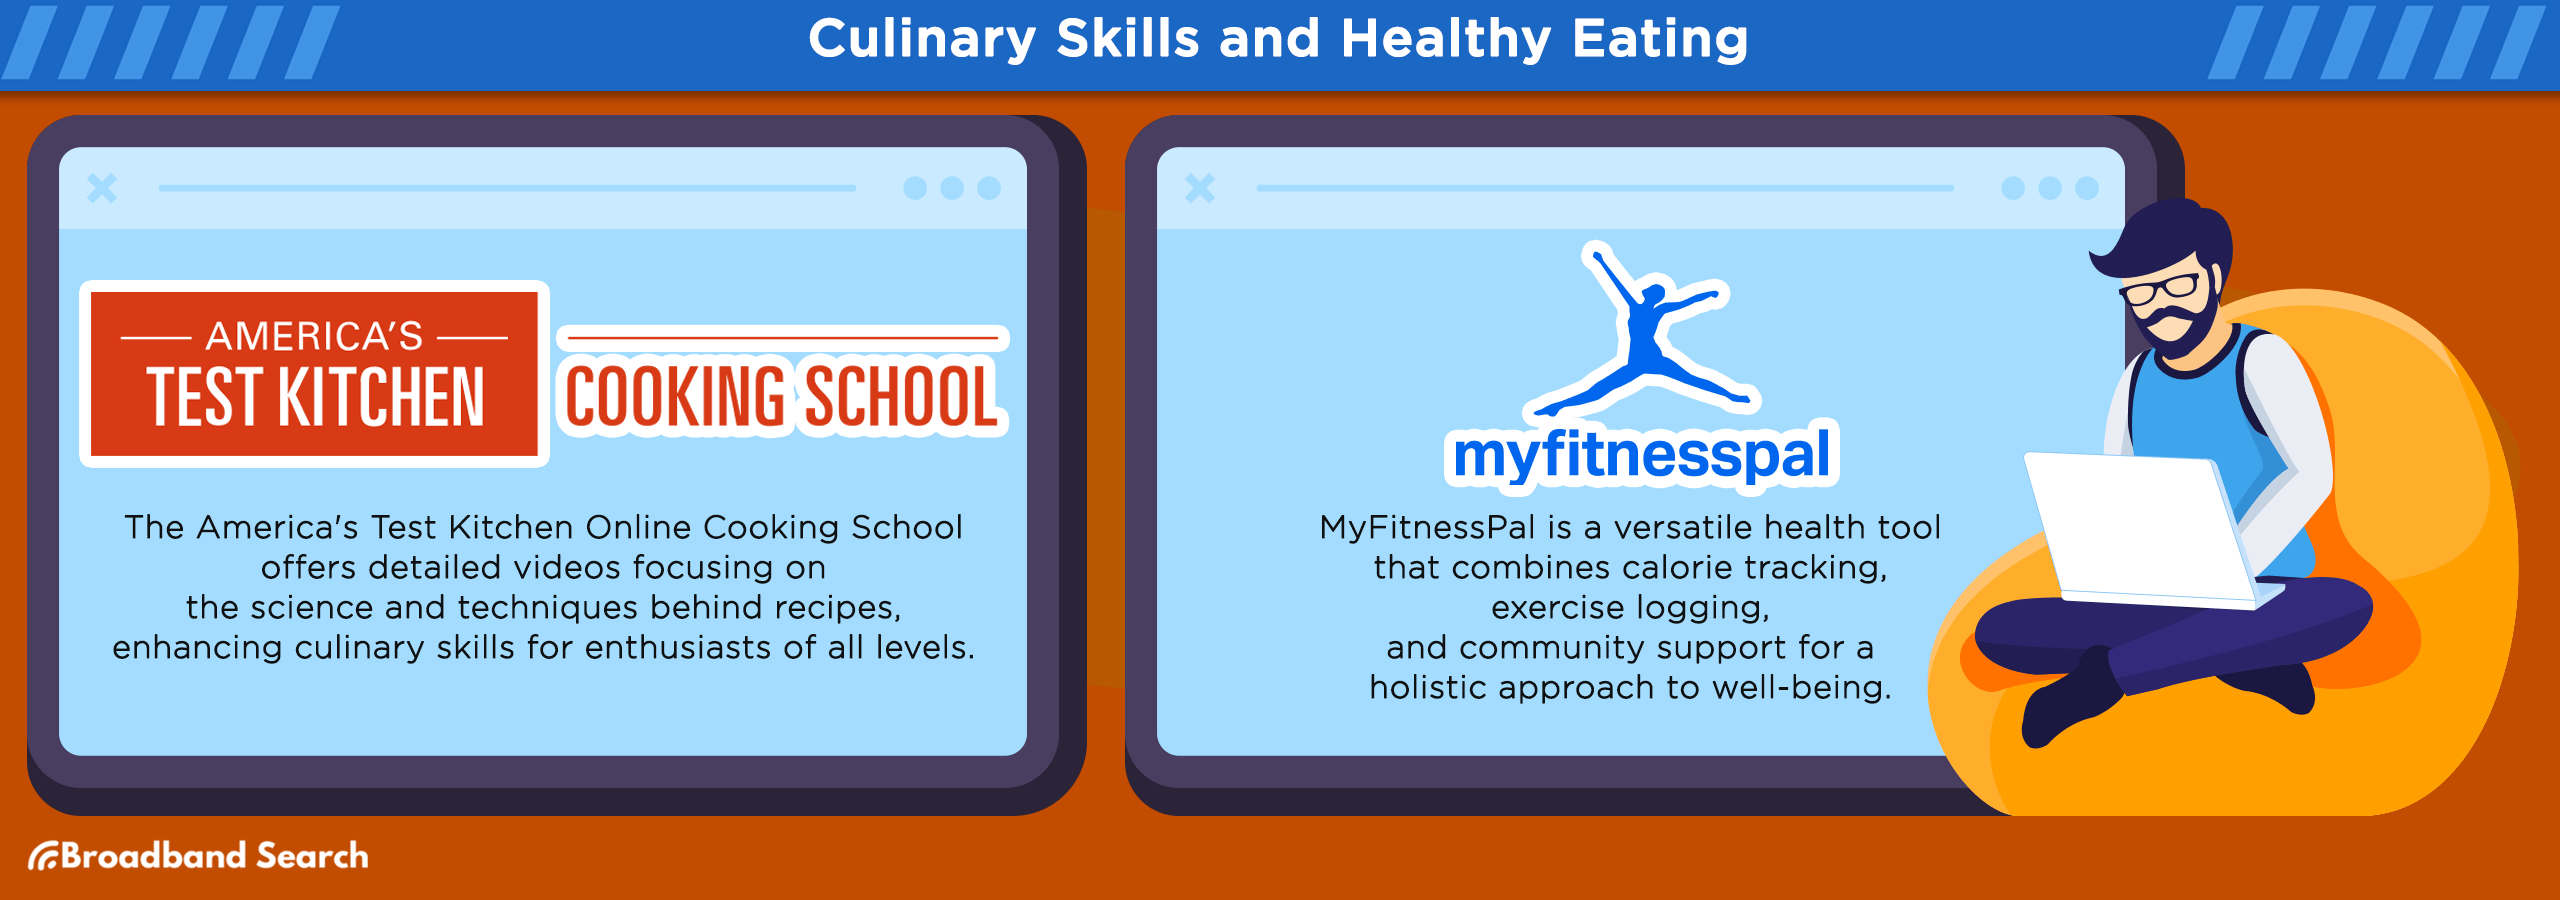 Culinary skills and healthy eating